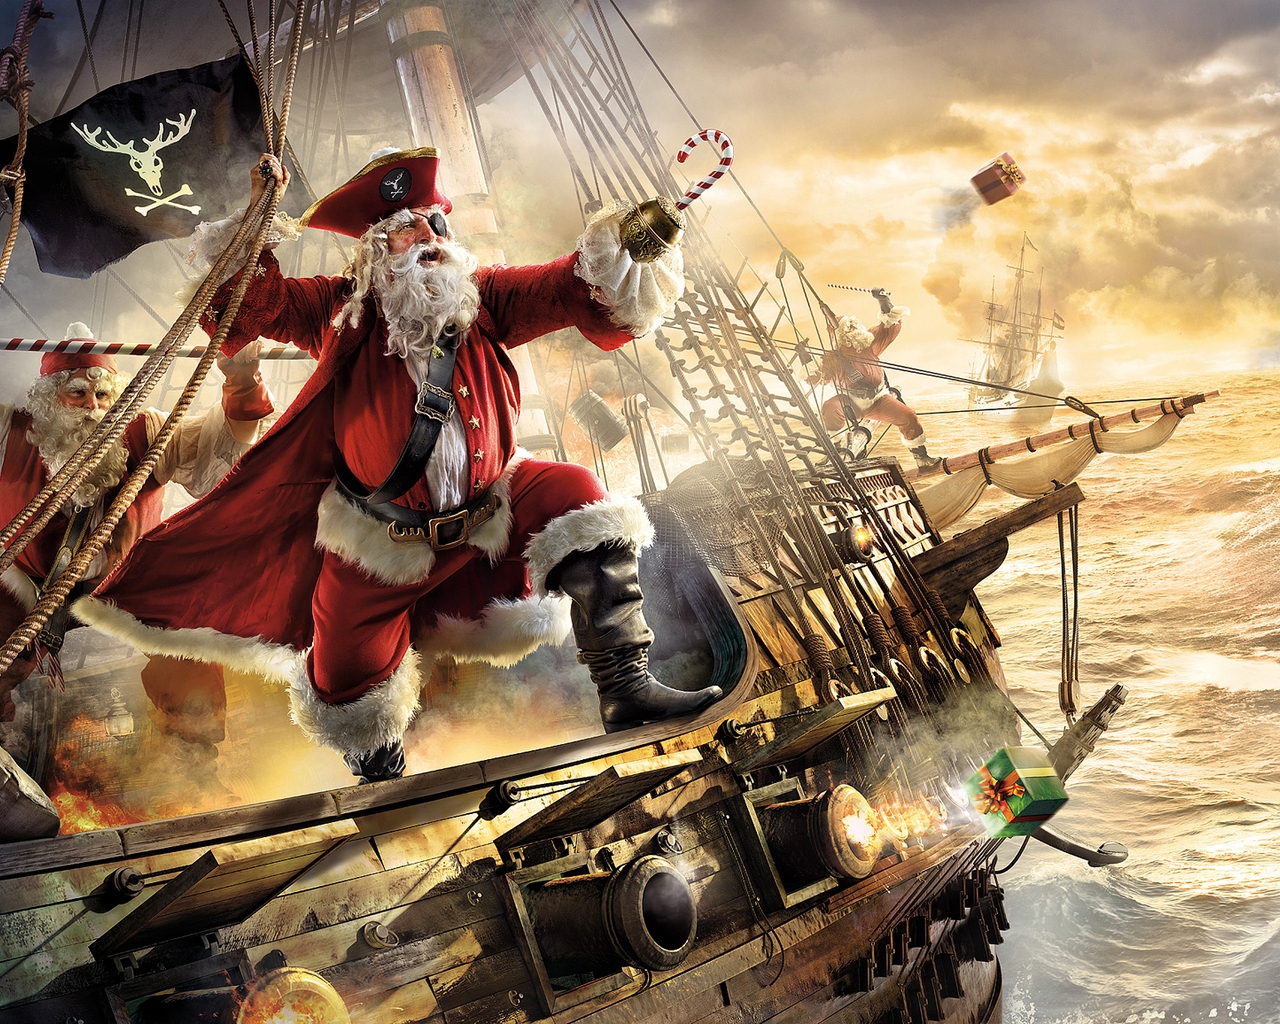 Santa Pirate for 1280 x 1024 resolution